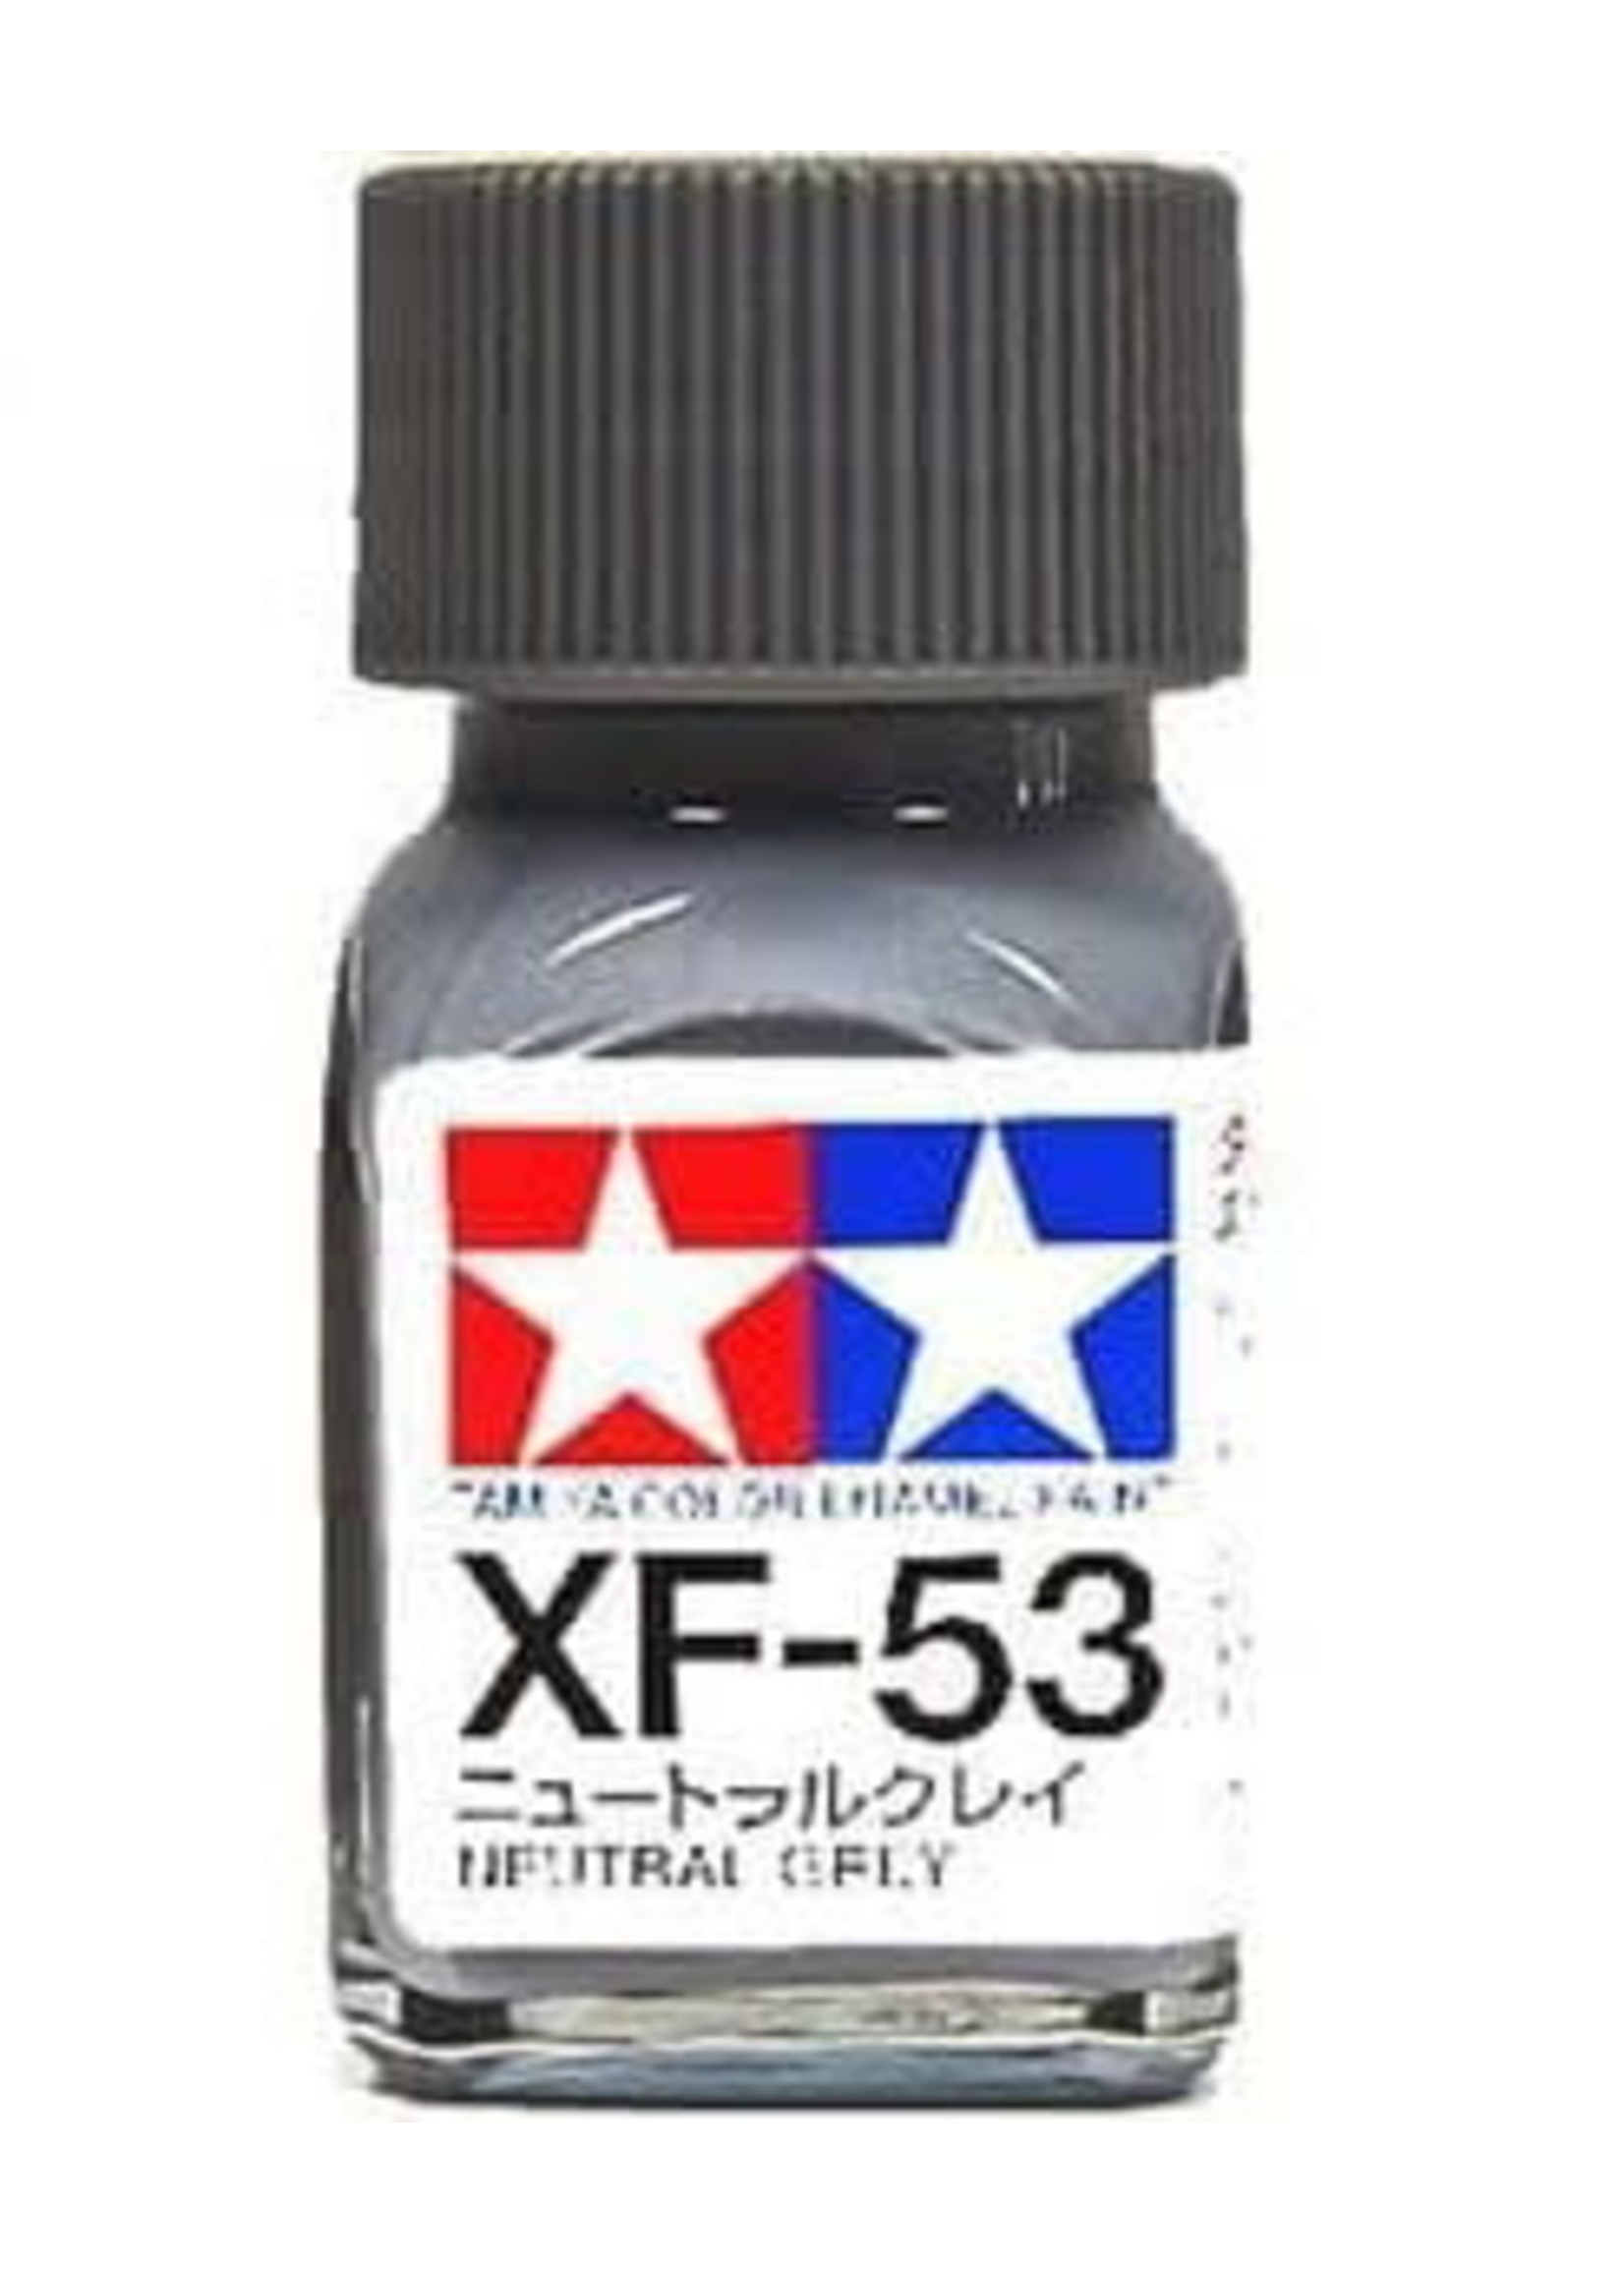 Tamiya Tamiya color enamel paint - XF-53 - Neutral grey